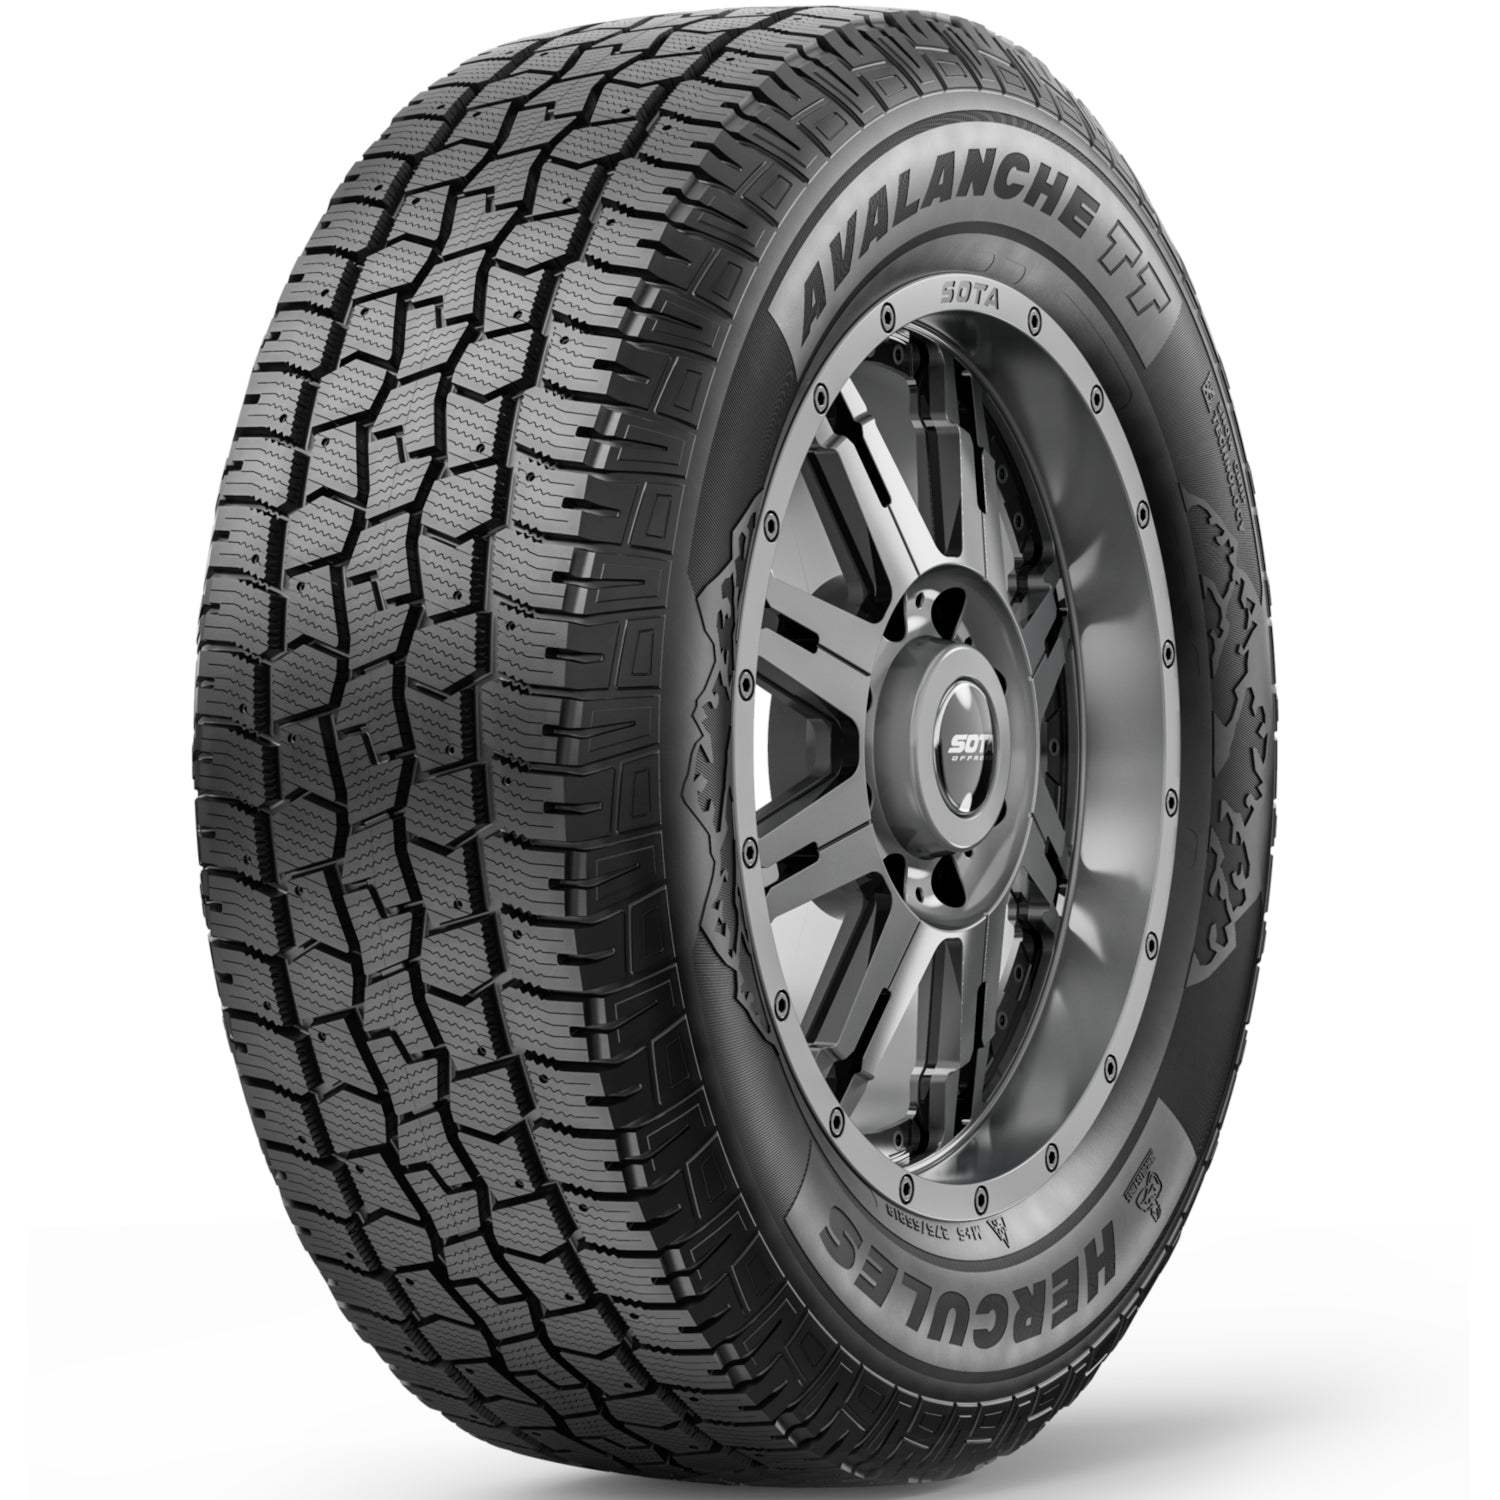 HERCULES AVALANCHE TT 275/55R20XL (32X10.8R 20) Tires